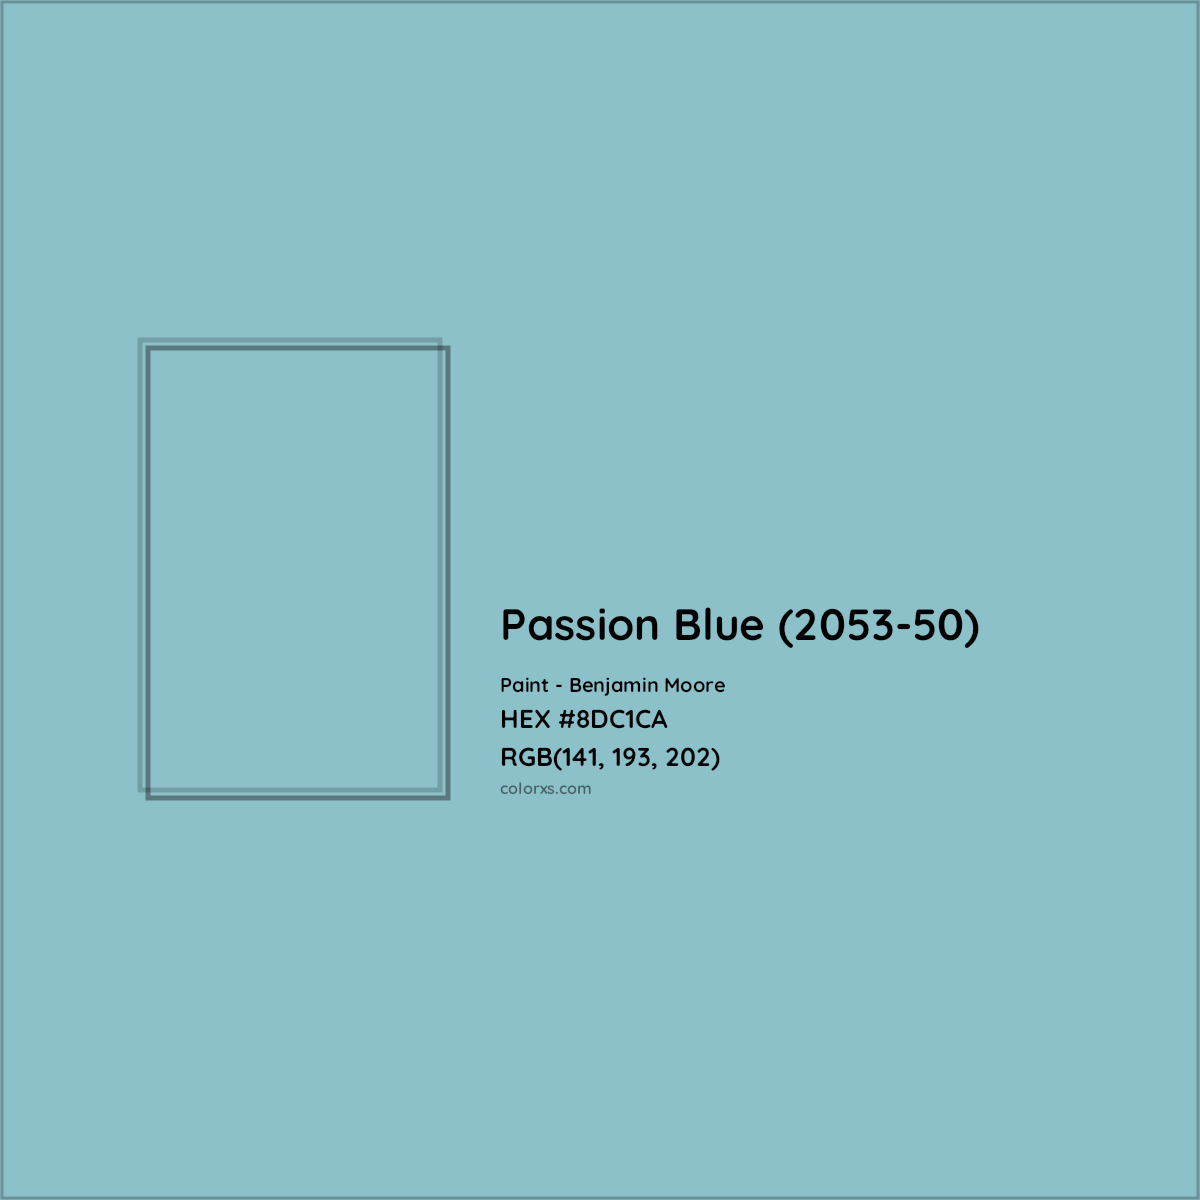 HEX #8DC1CA Passion Blue (2053-50) Paint Benjamin Moore - Color Code